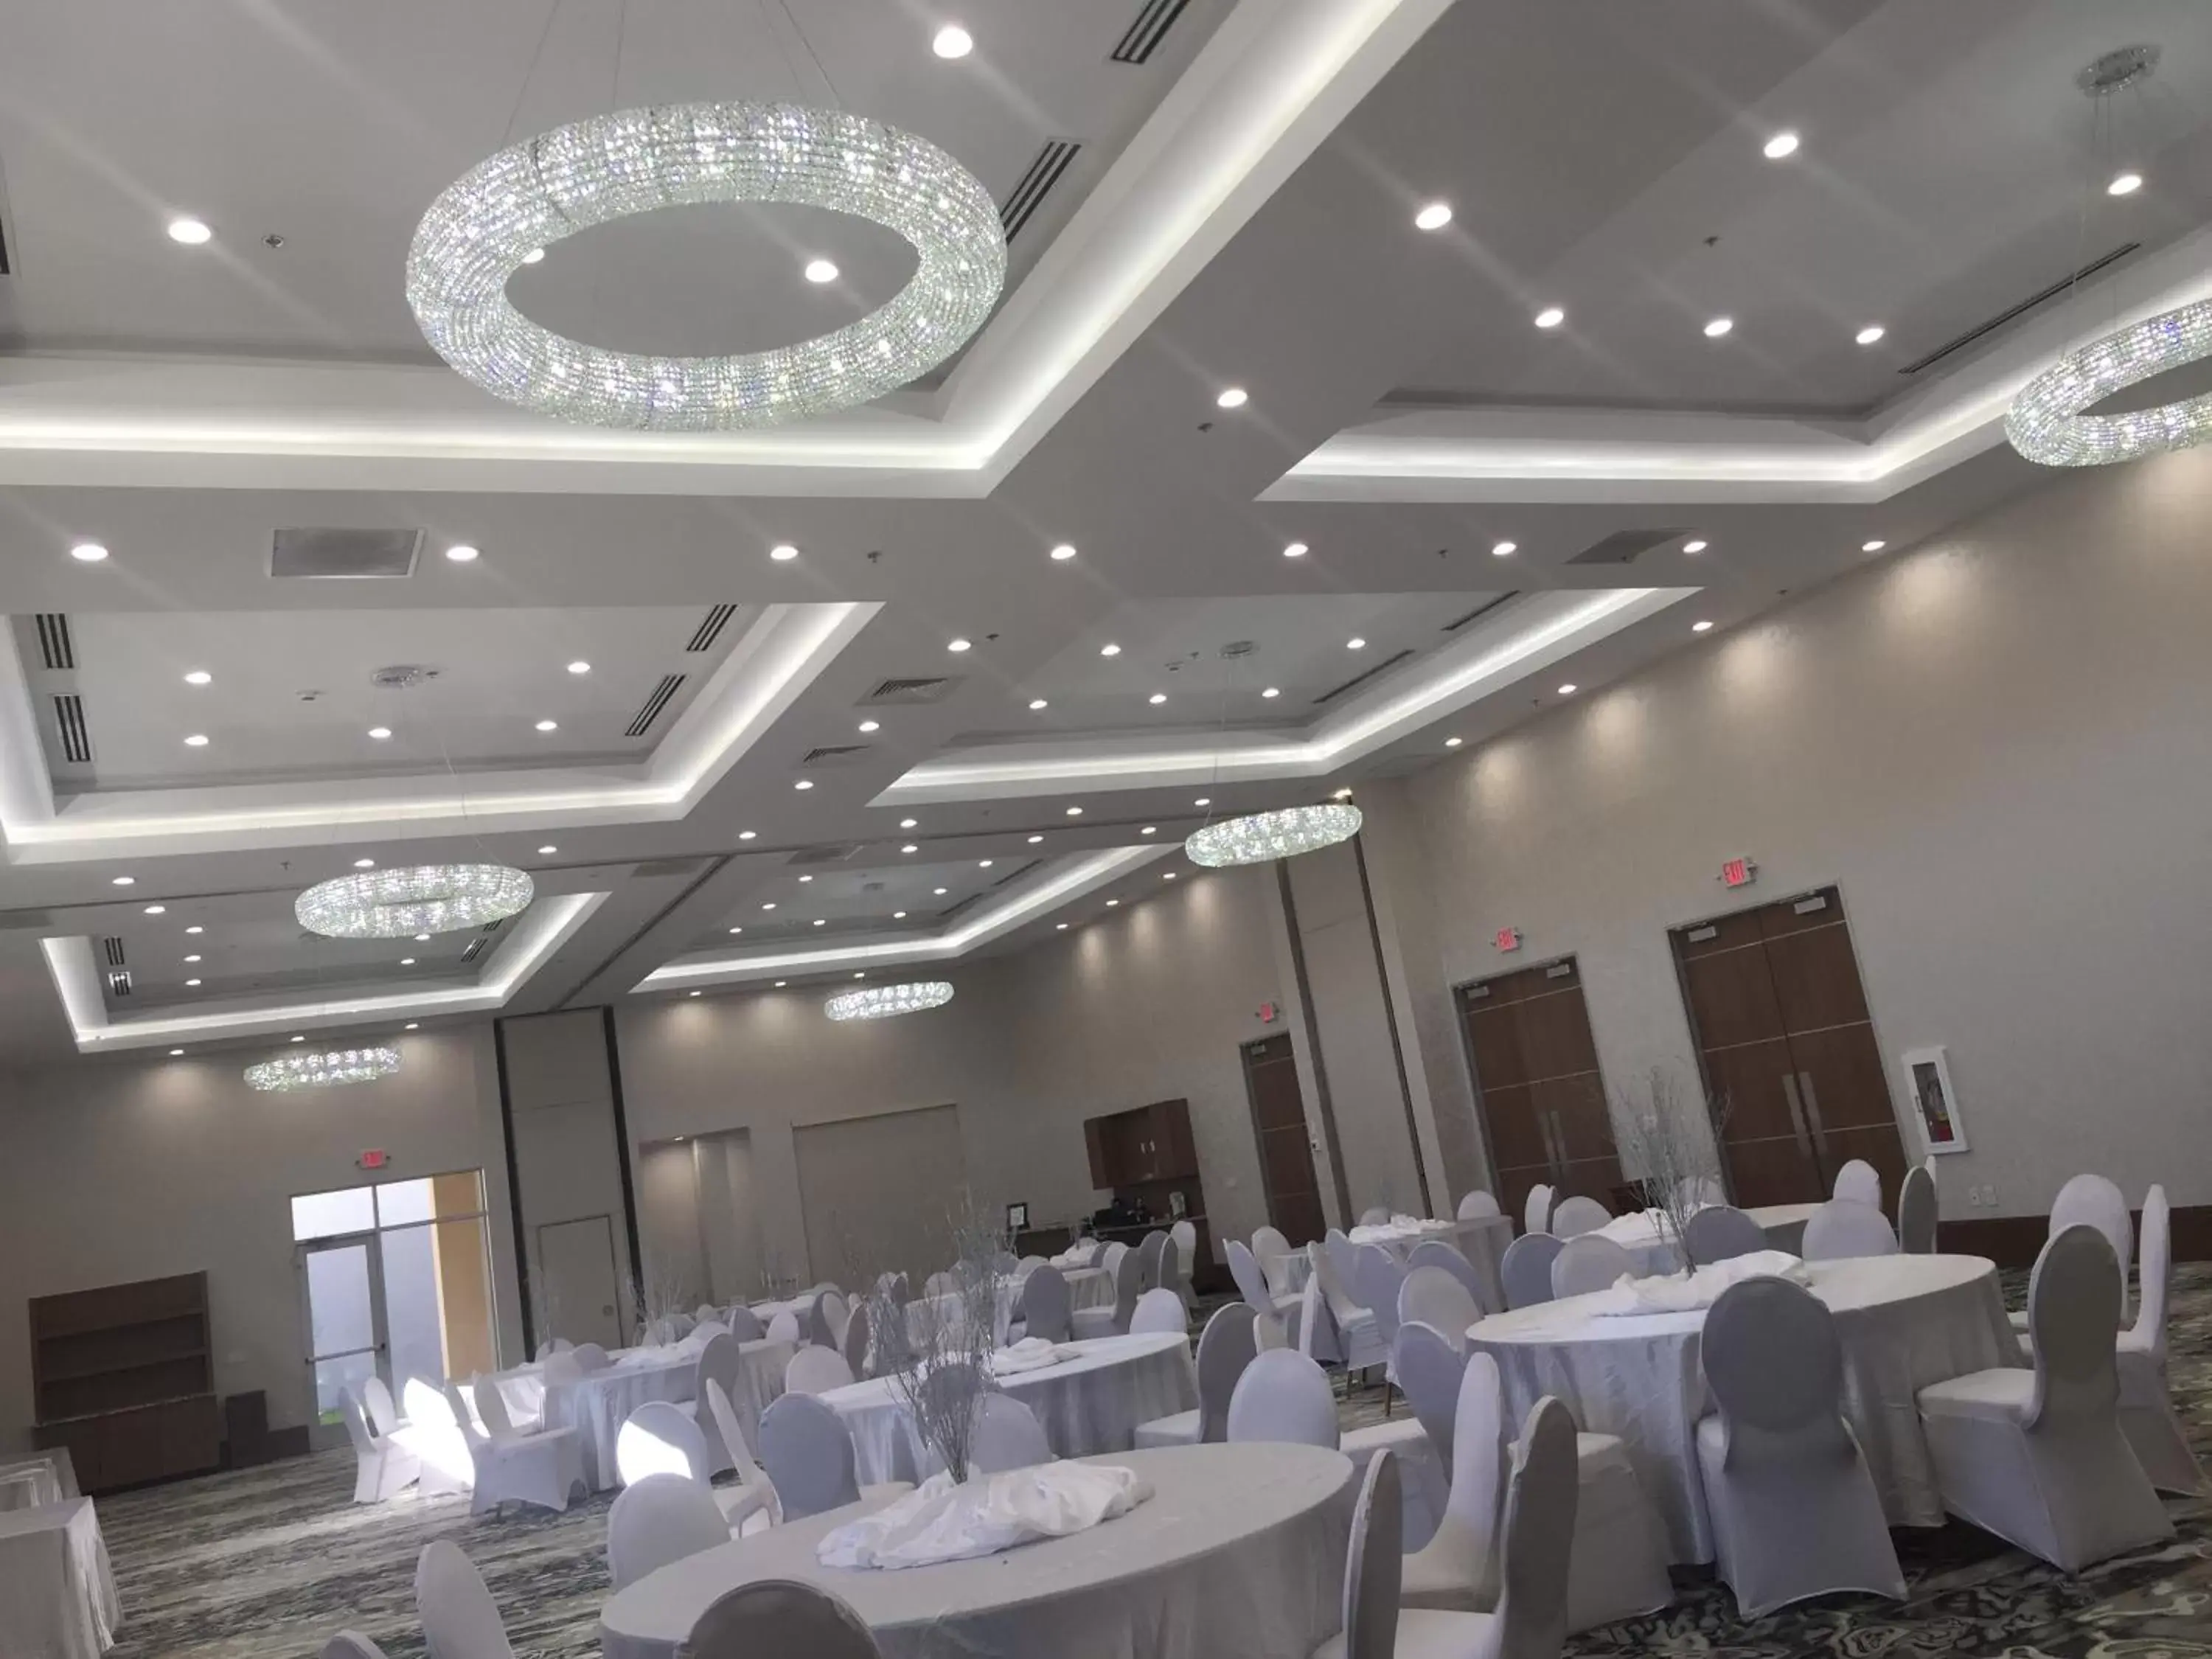 Banquet/Function facilities, Banquet Facilities in Tru By Hilton Katy Houston West, Tx